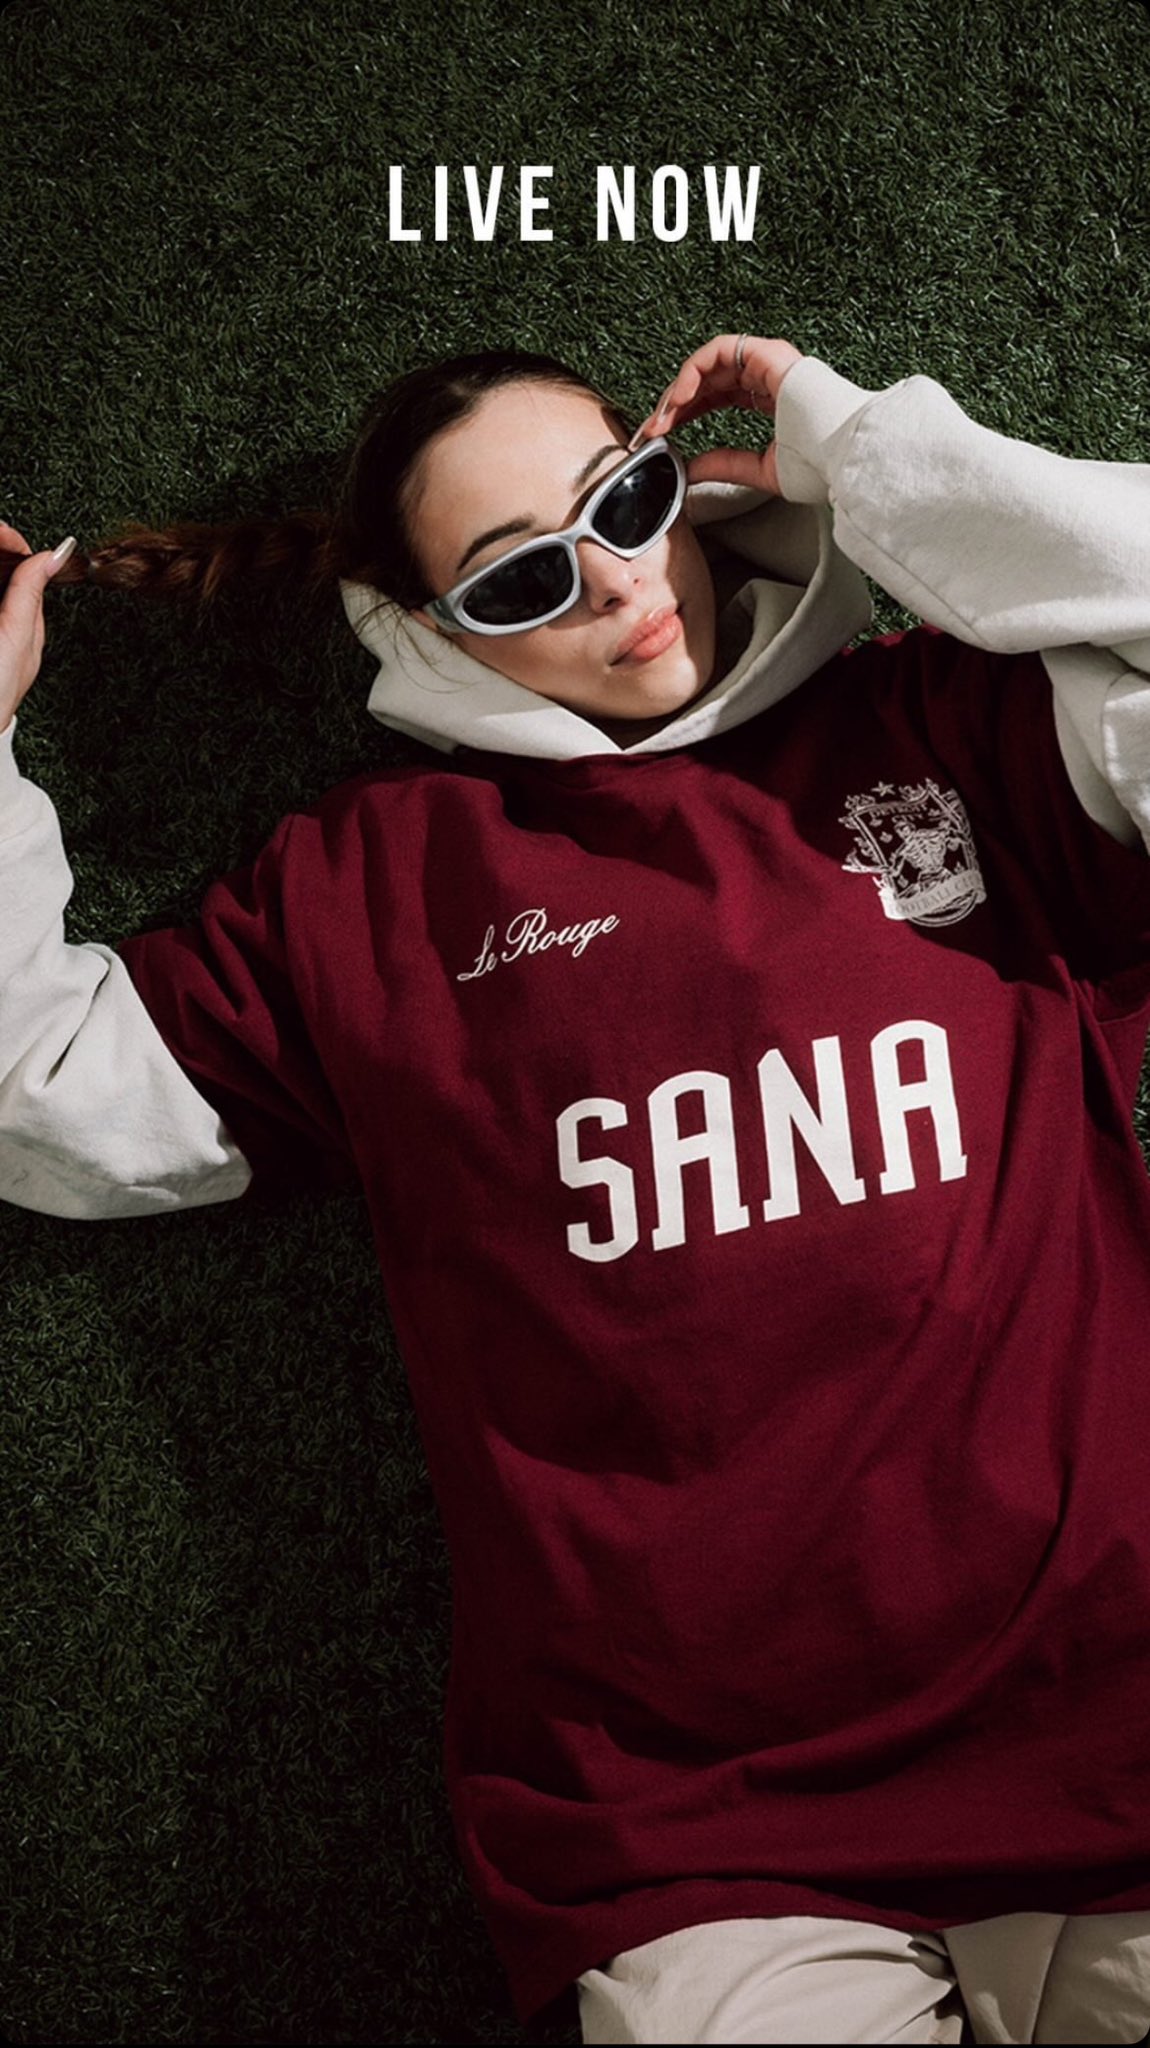 Sana Detroit Breaks Into the Fashion Industry